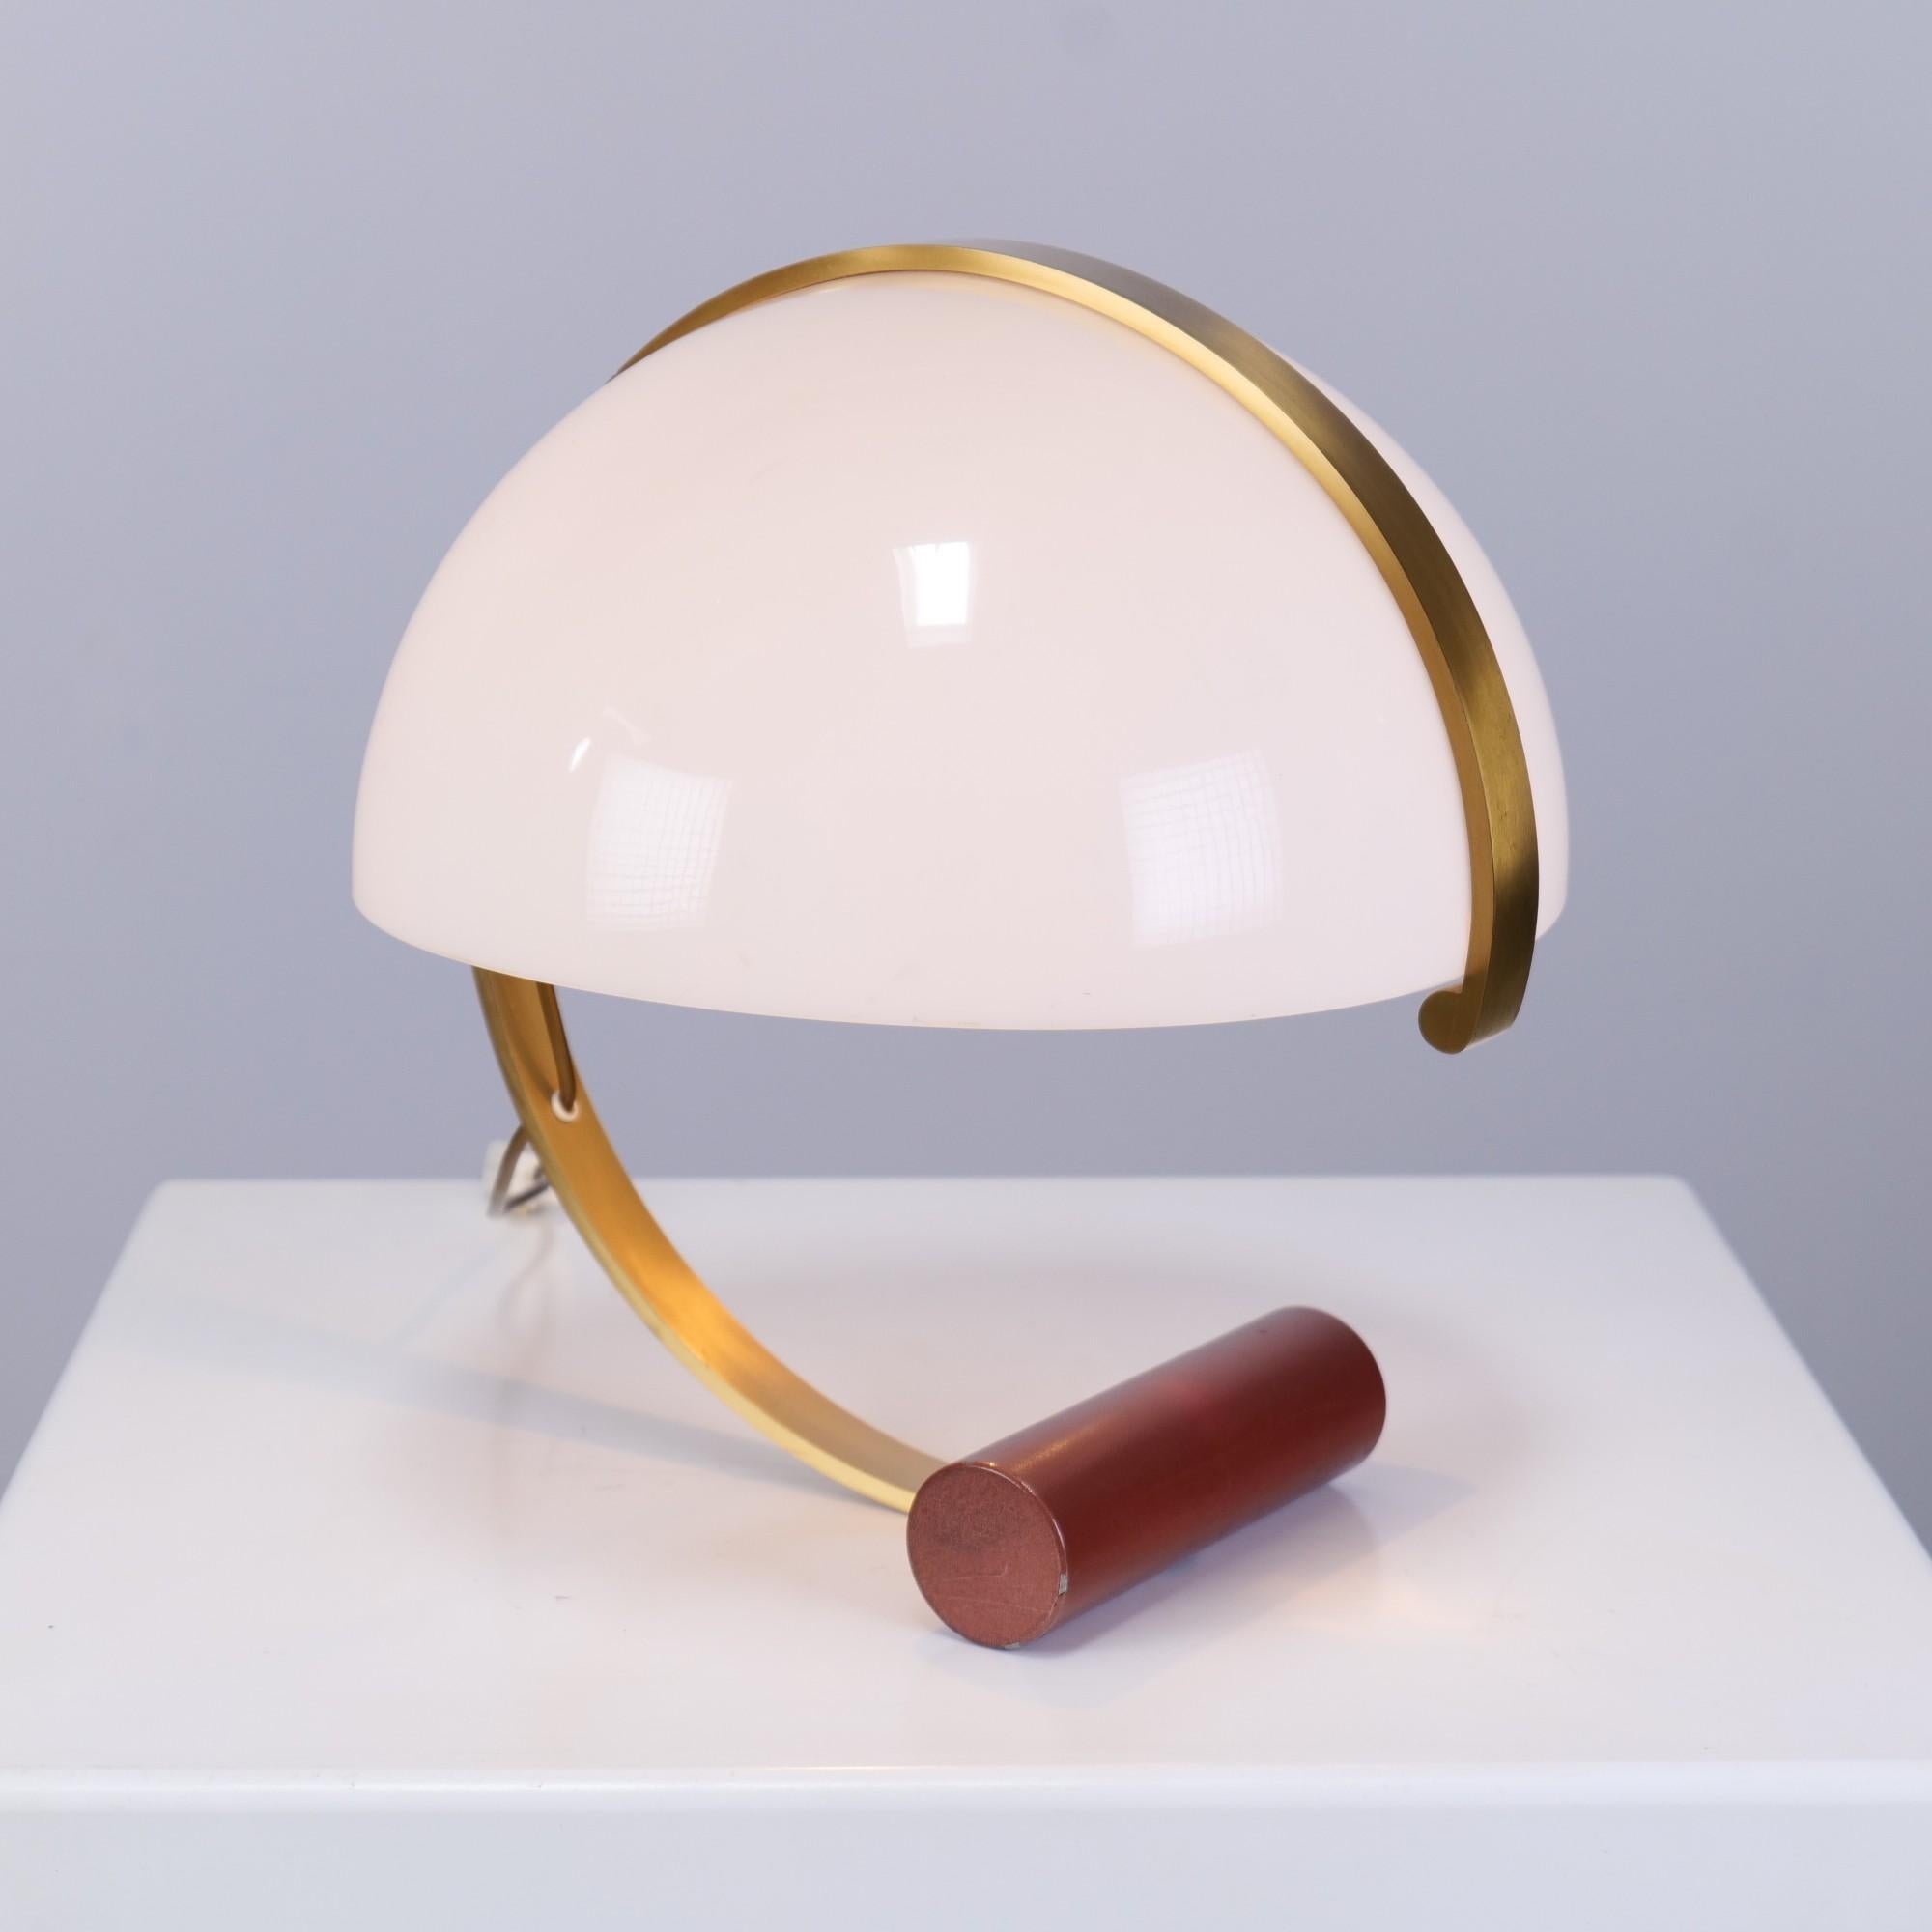 Vintage Italian Space Age Lamp by Artimeta for Stilnovo 1